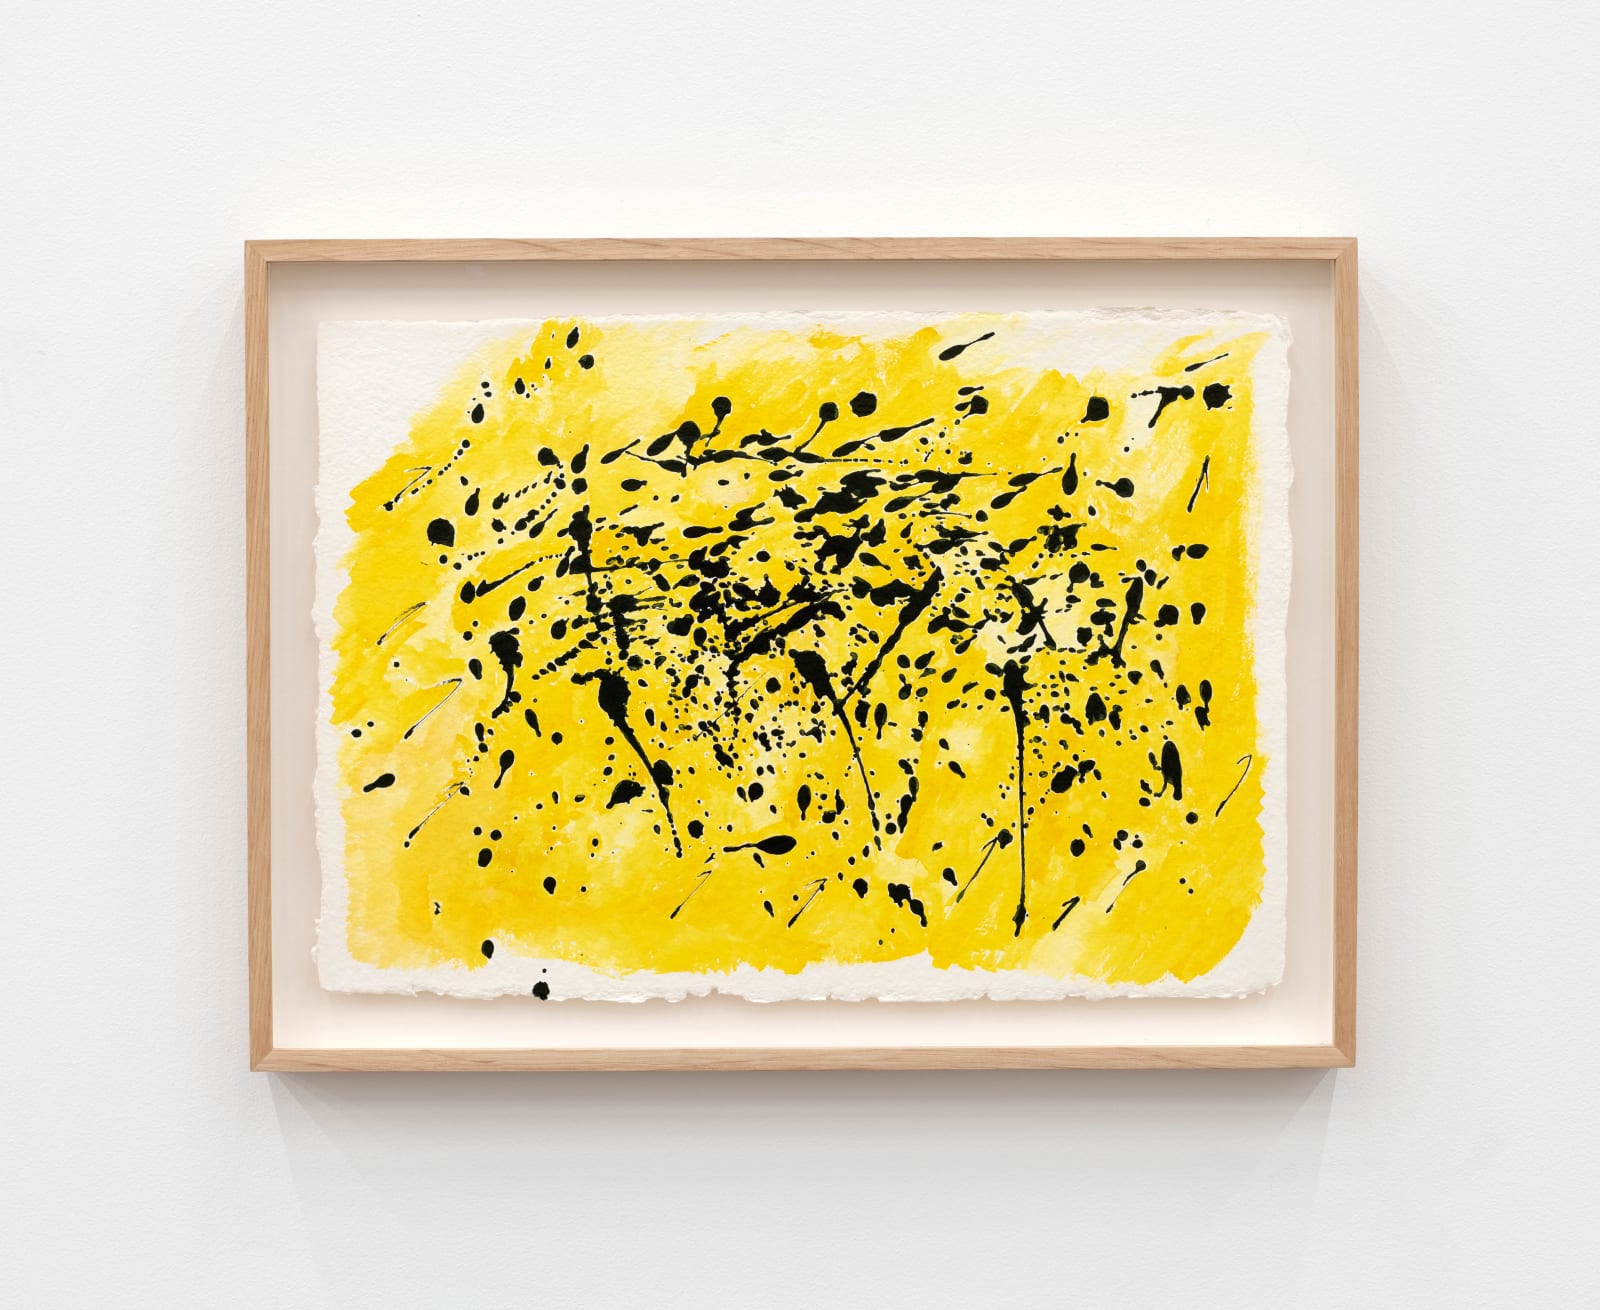 Simone Fattal, Suite en jaune N°1, 2016